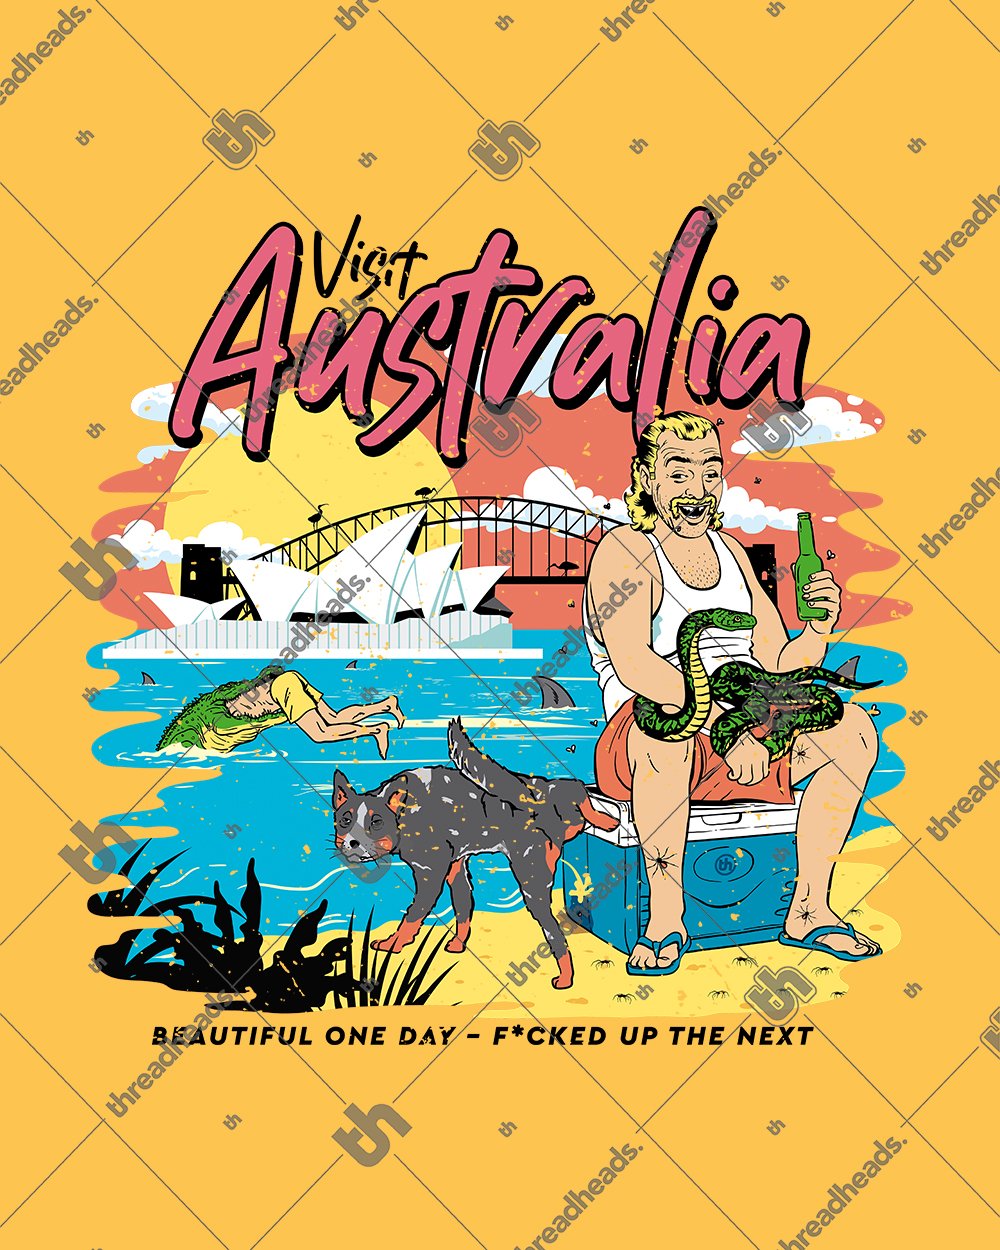 Visit Australia T-Shirt Australia Online #colour_yellow